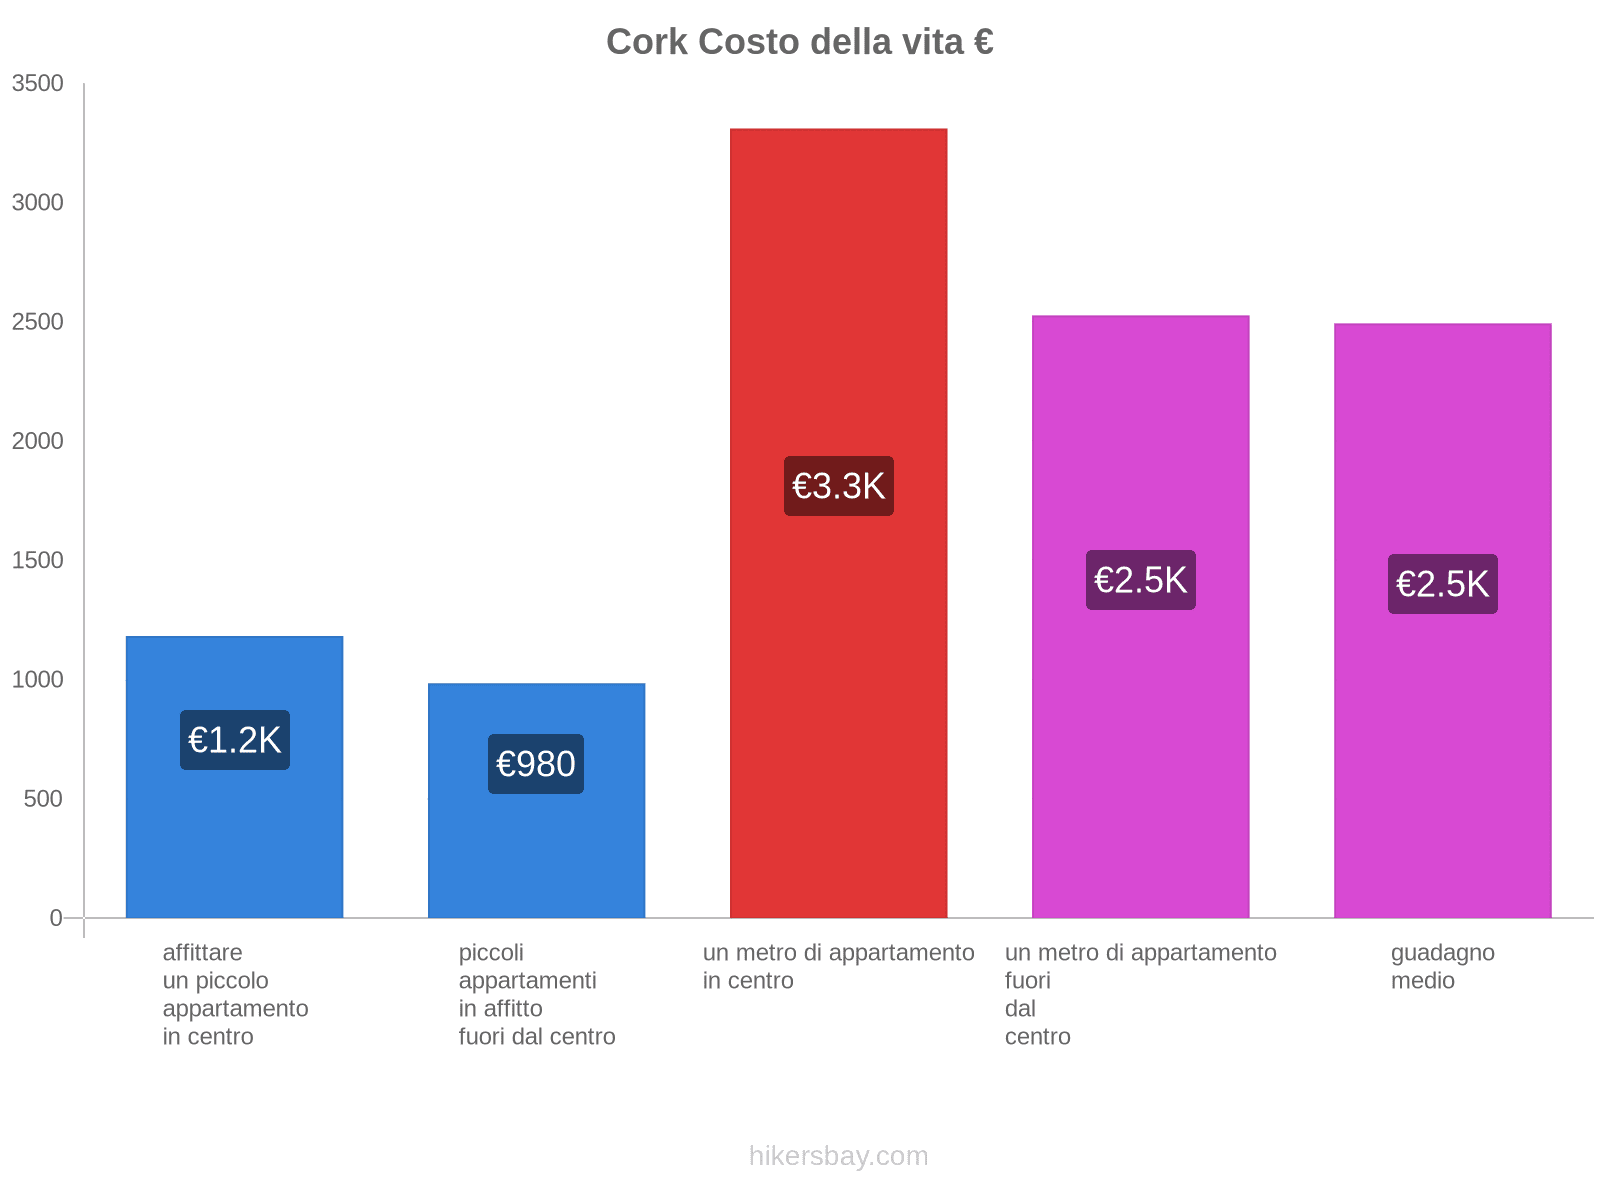 Cork costo della vita hikersbay.com